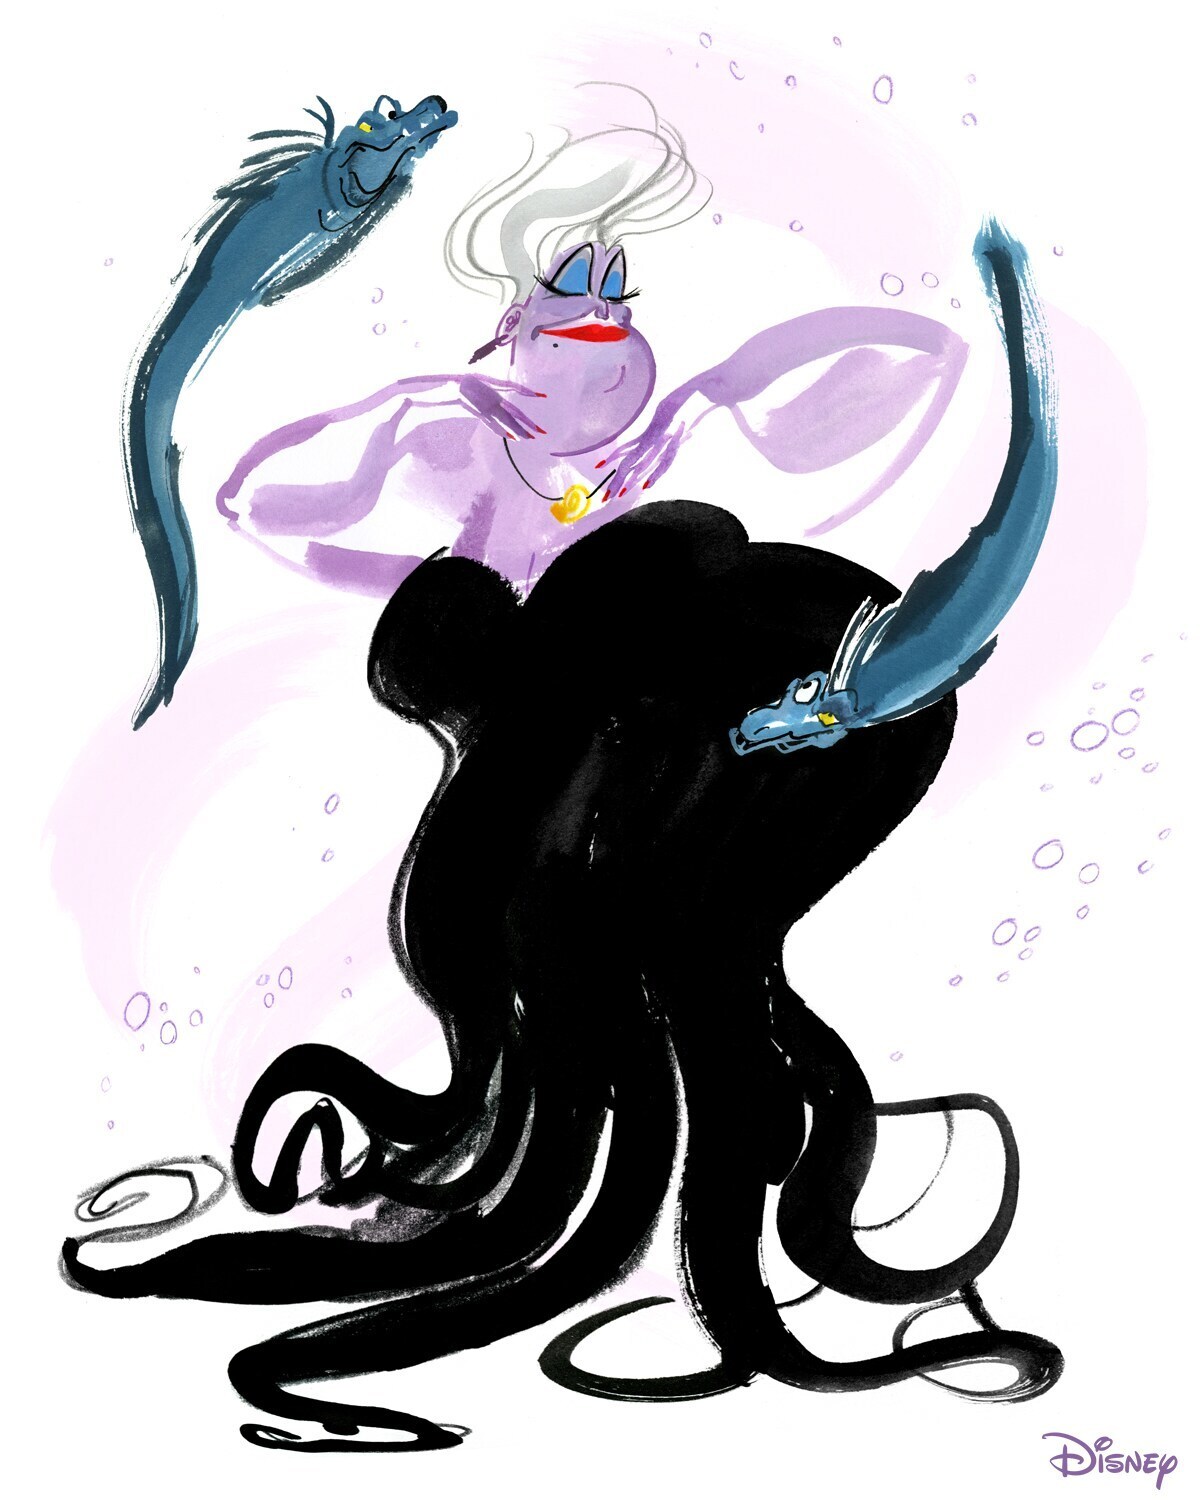 Ursula with Flotsam and Jetsam